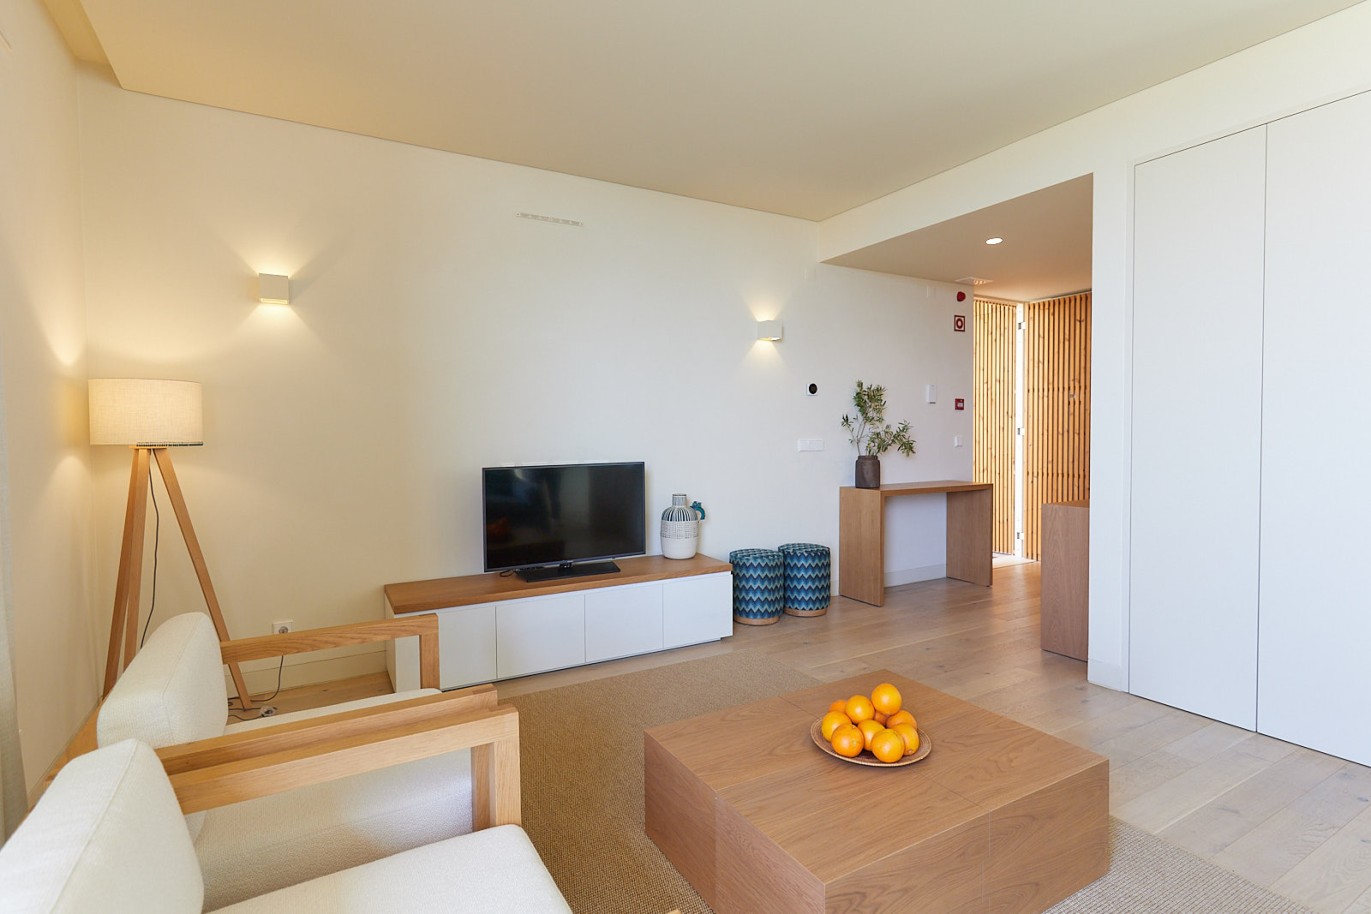 2 bedroom apartment in resort, for sale in Porches, Algarve_228727